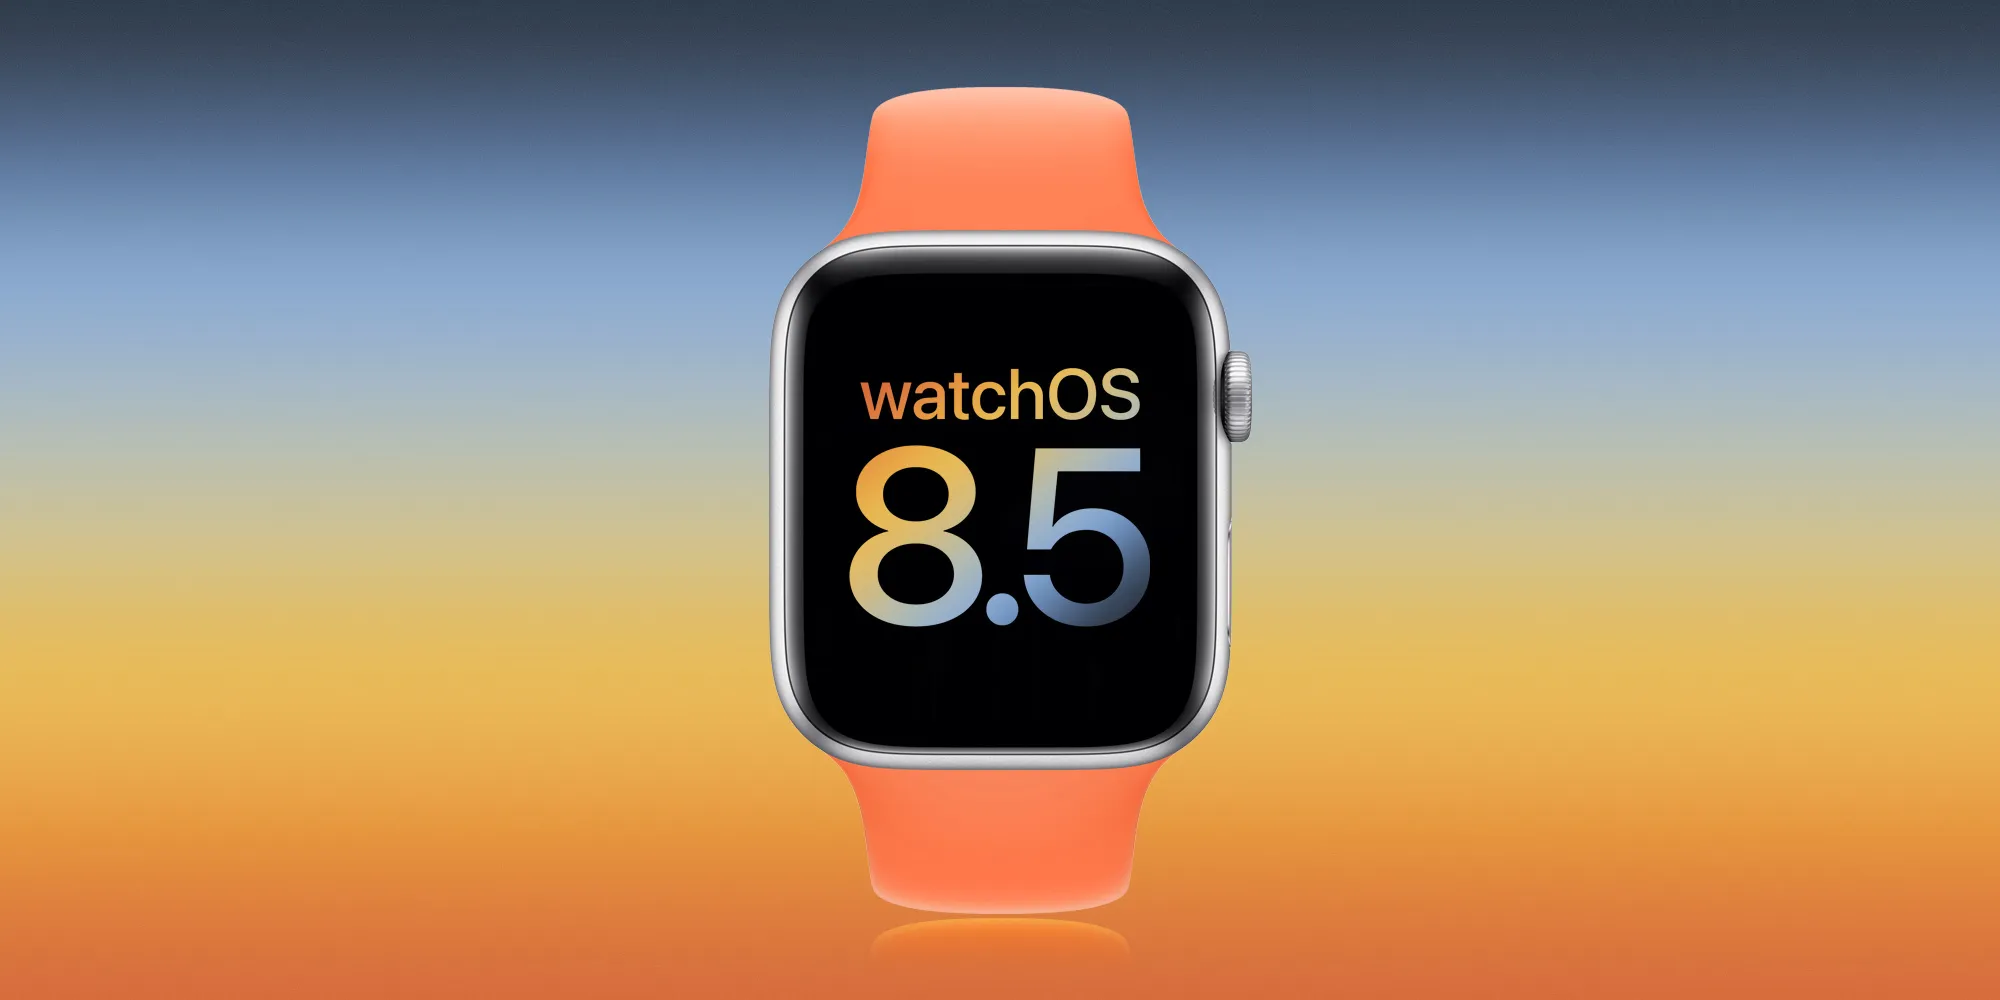 Apple watch watchOS 8.5